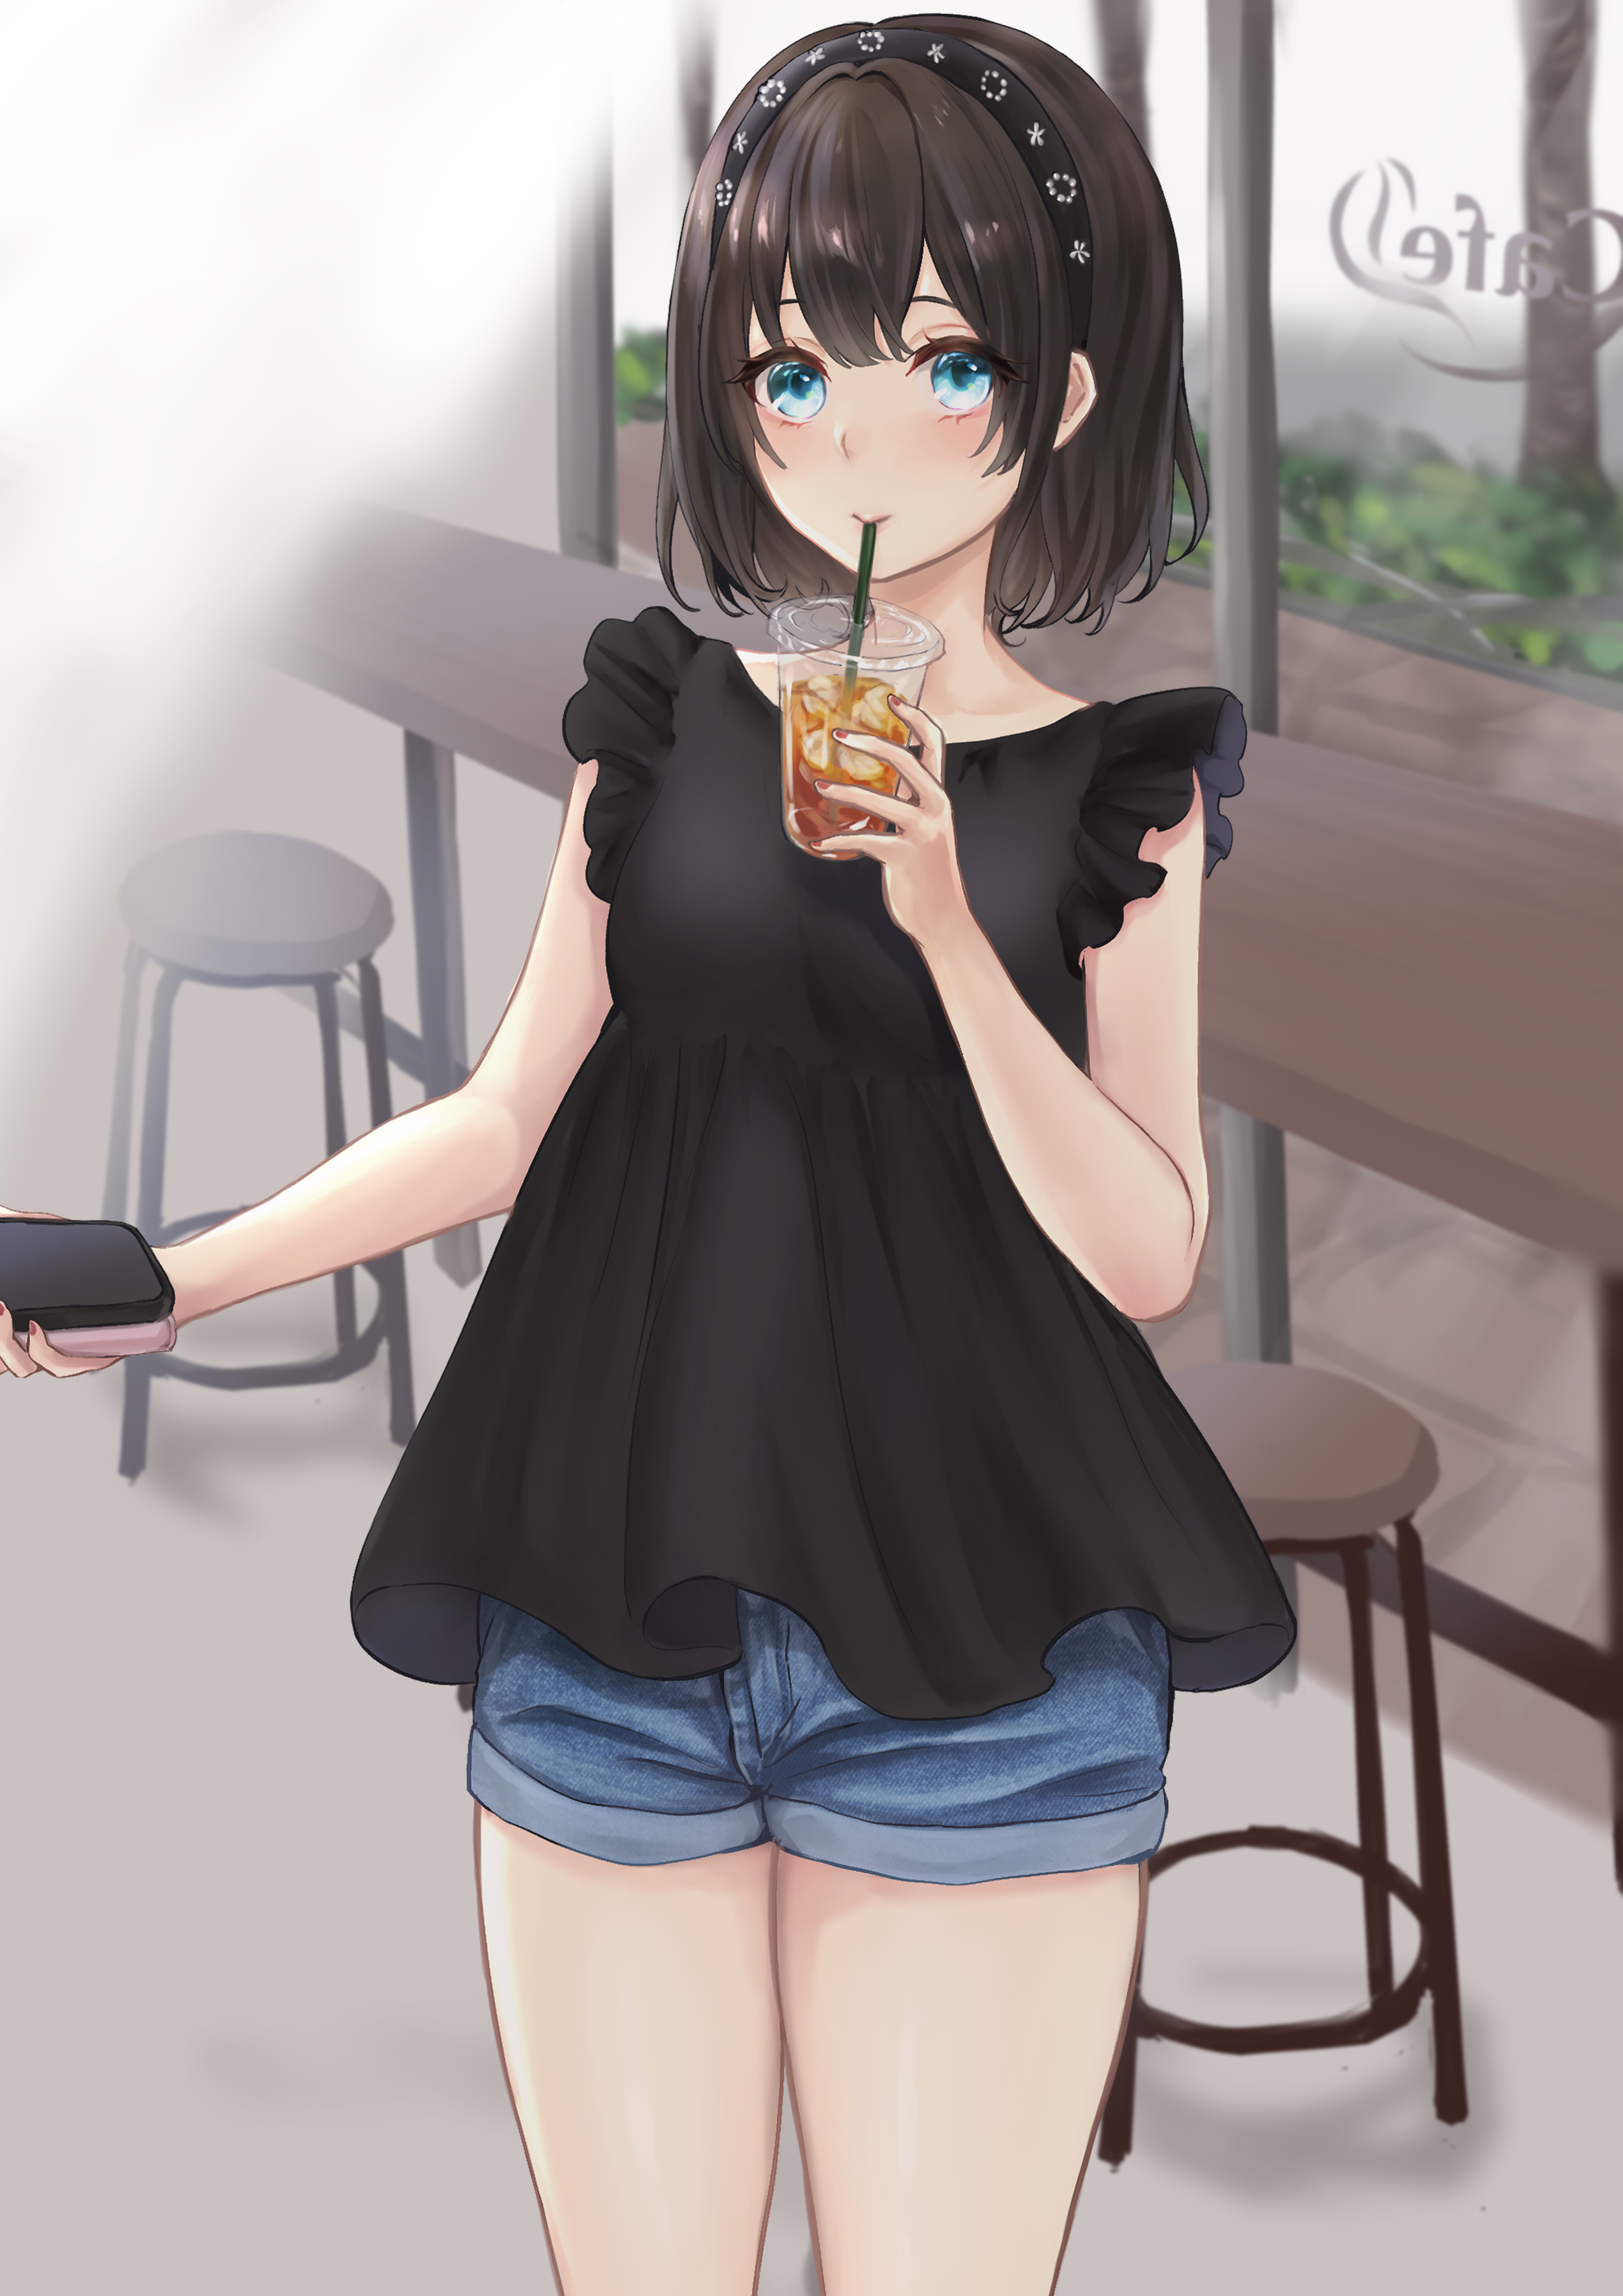 Girl Drink Cup Anime Art